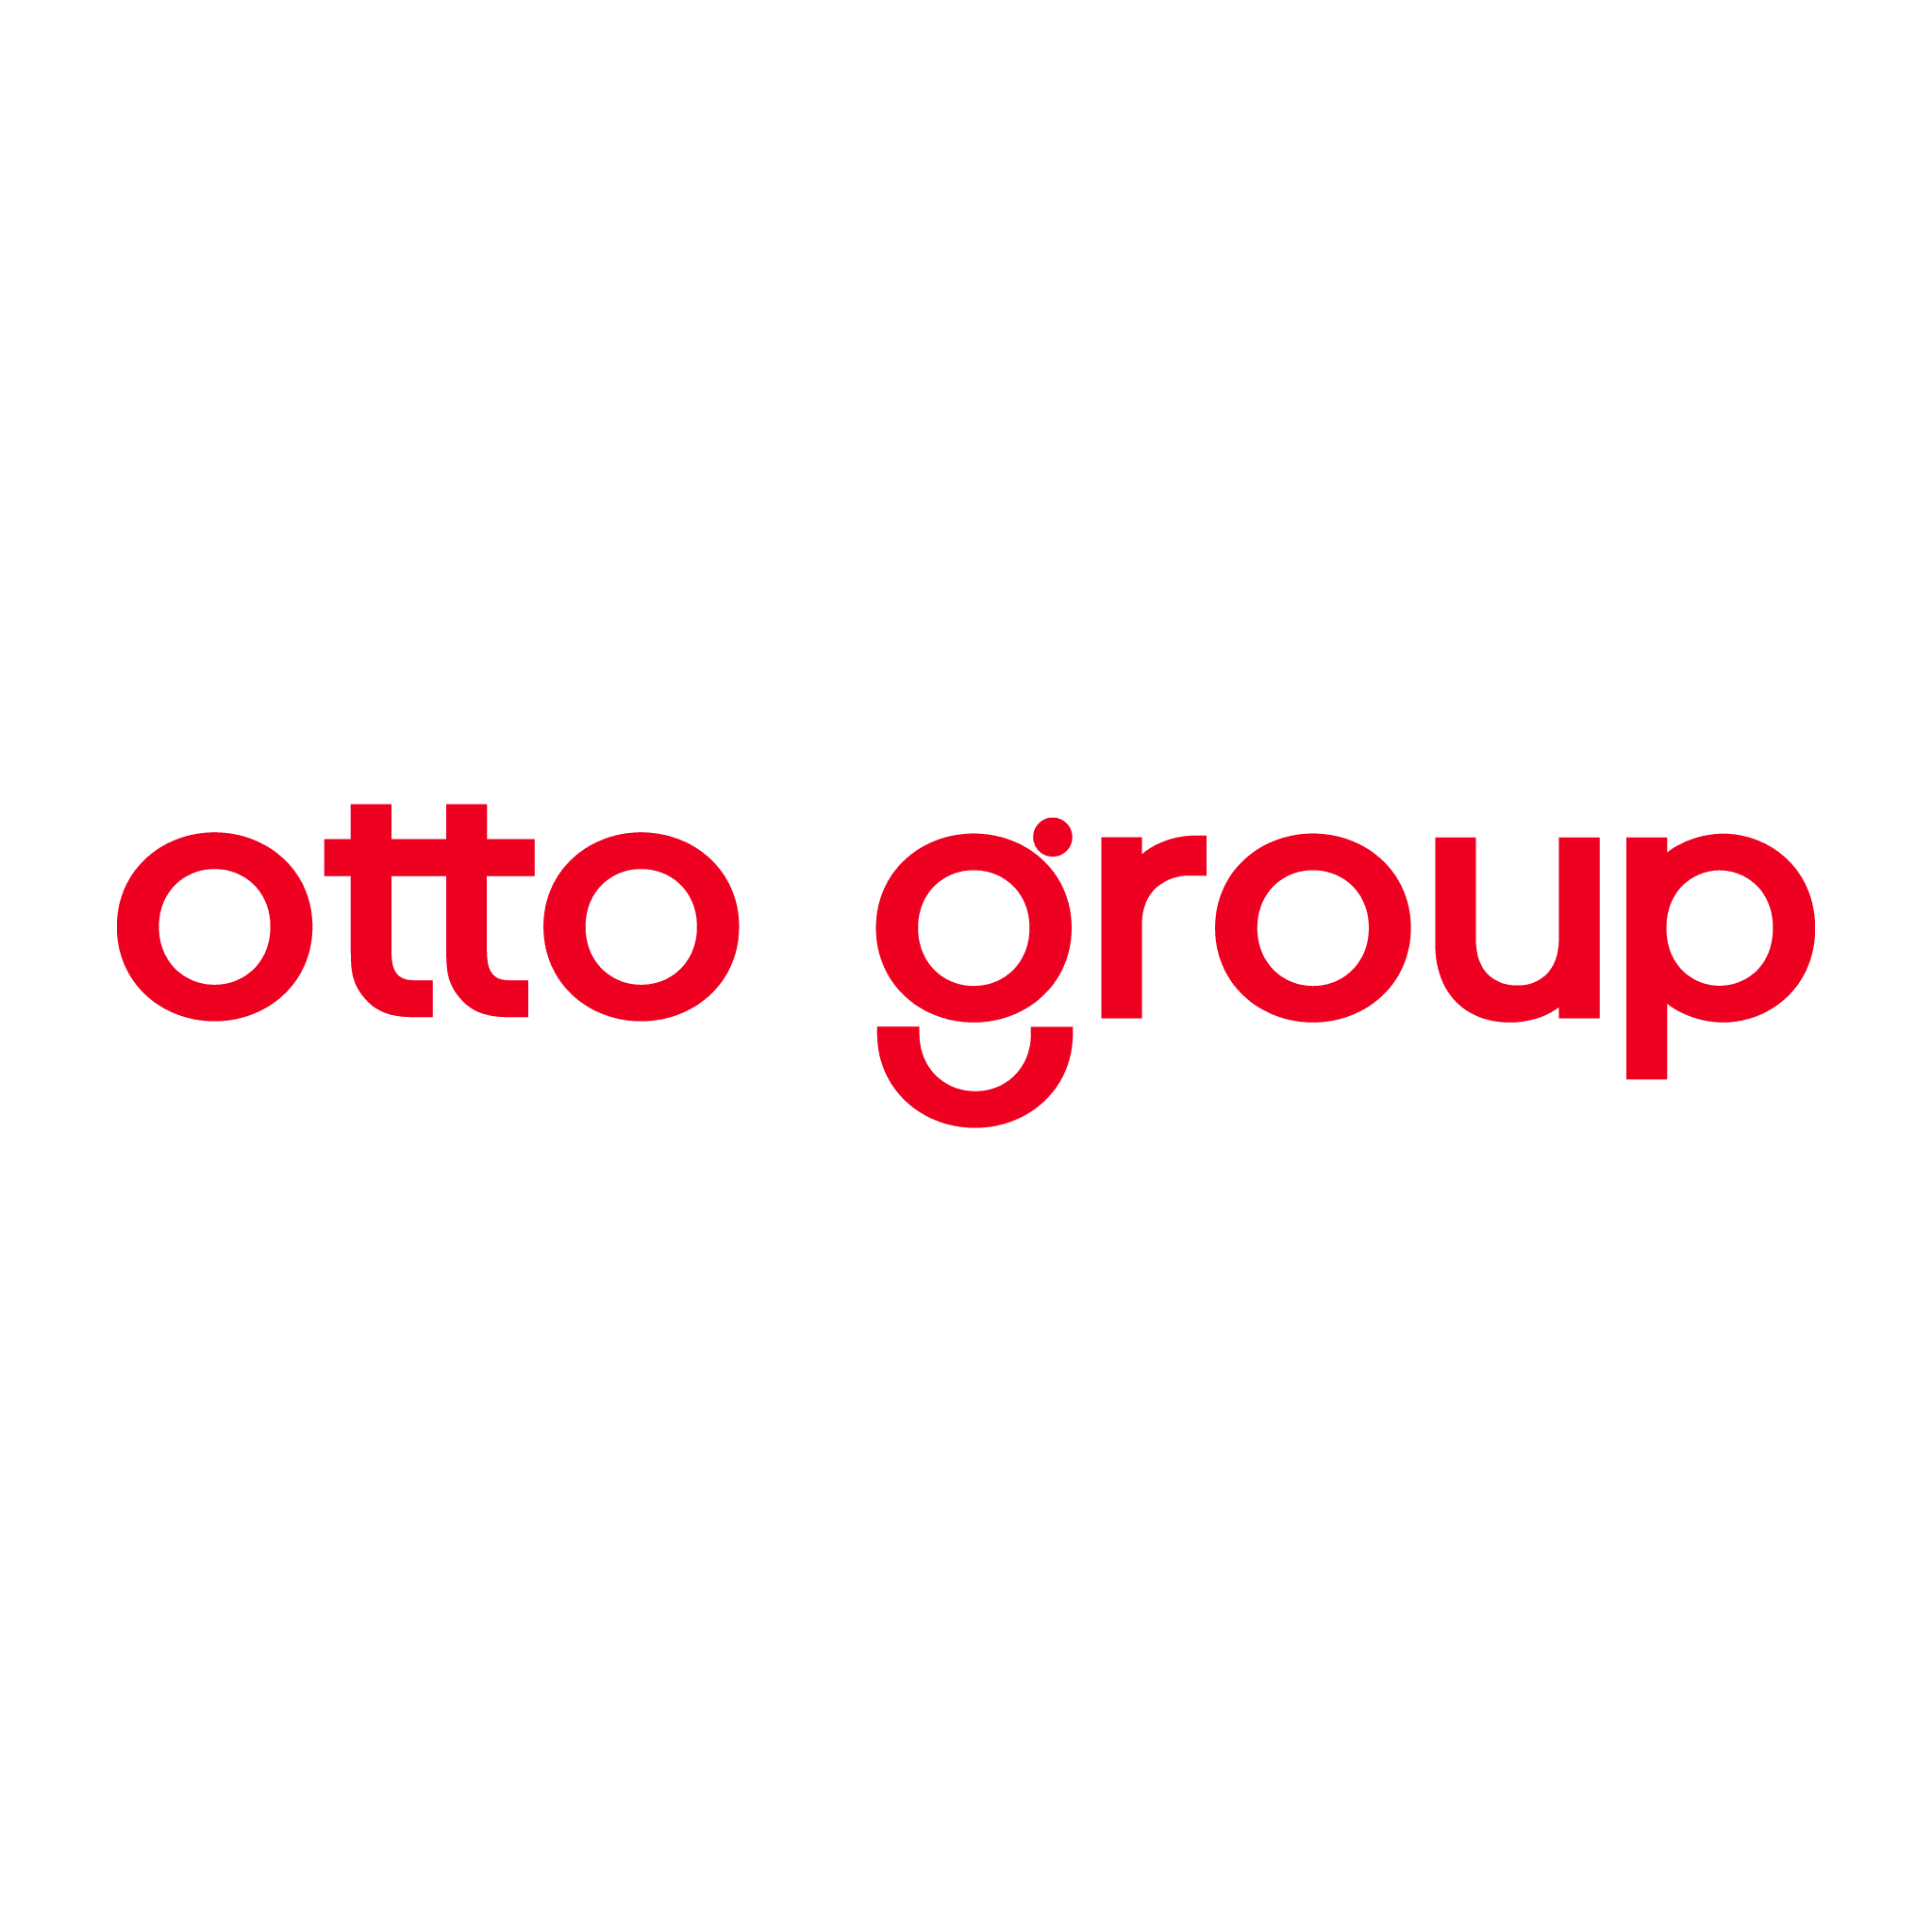 vetor otto group